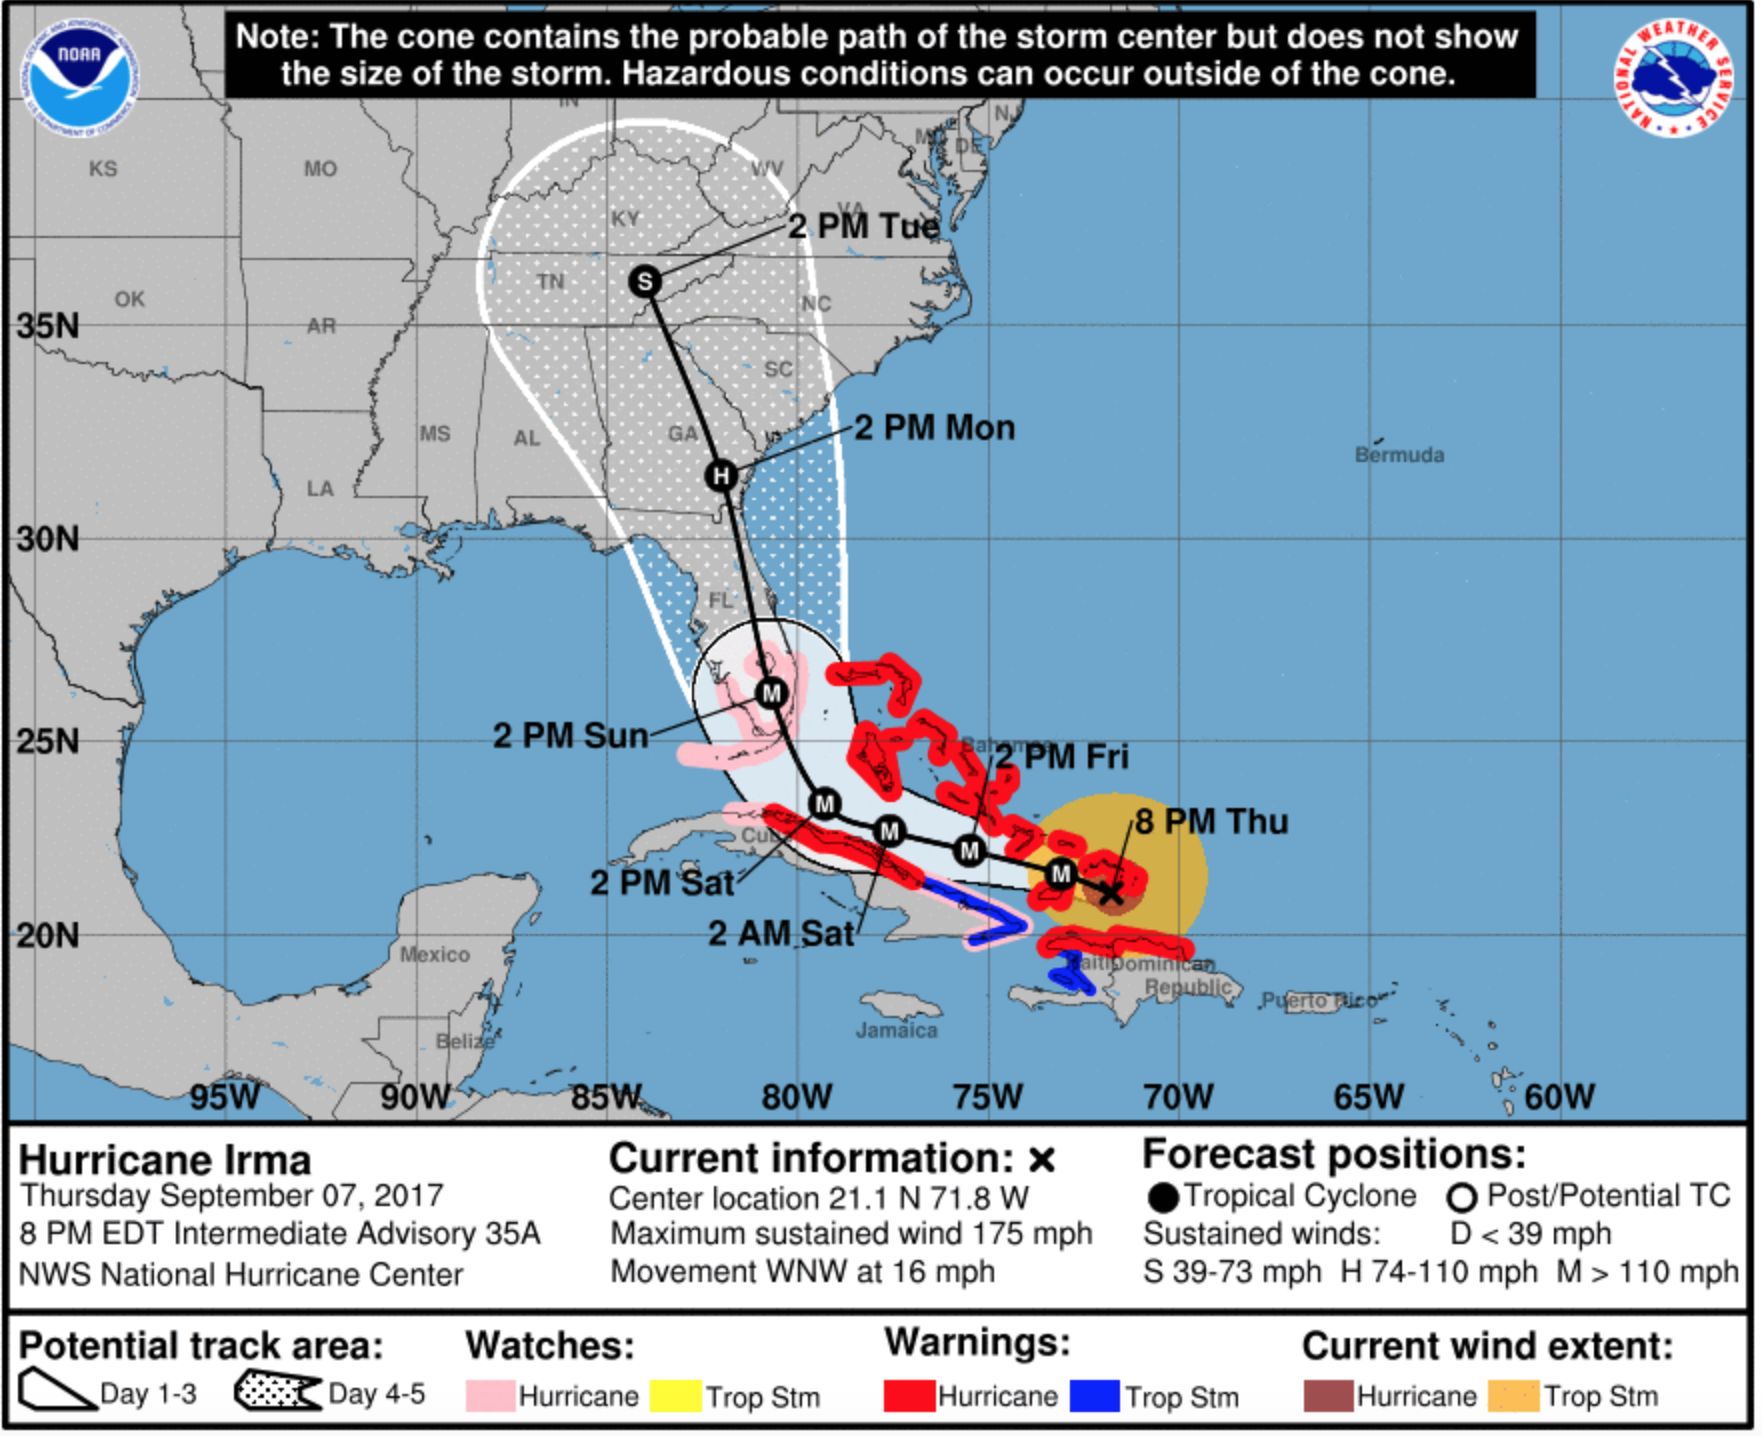 Hurricane Irma update 8 PM EDT Intermediate Advisory 35A. Photo courtesy of NWS National Hurricane Center